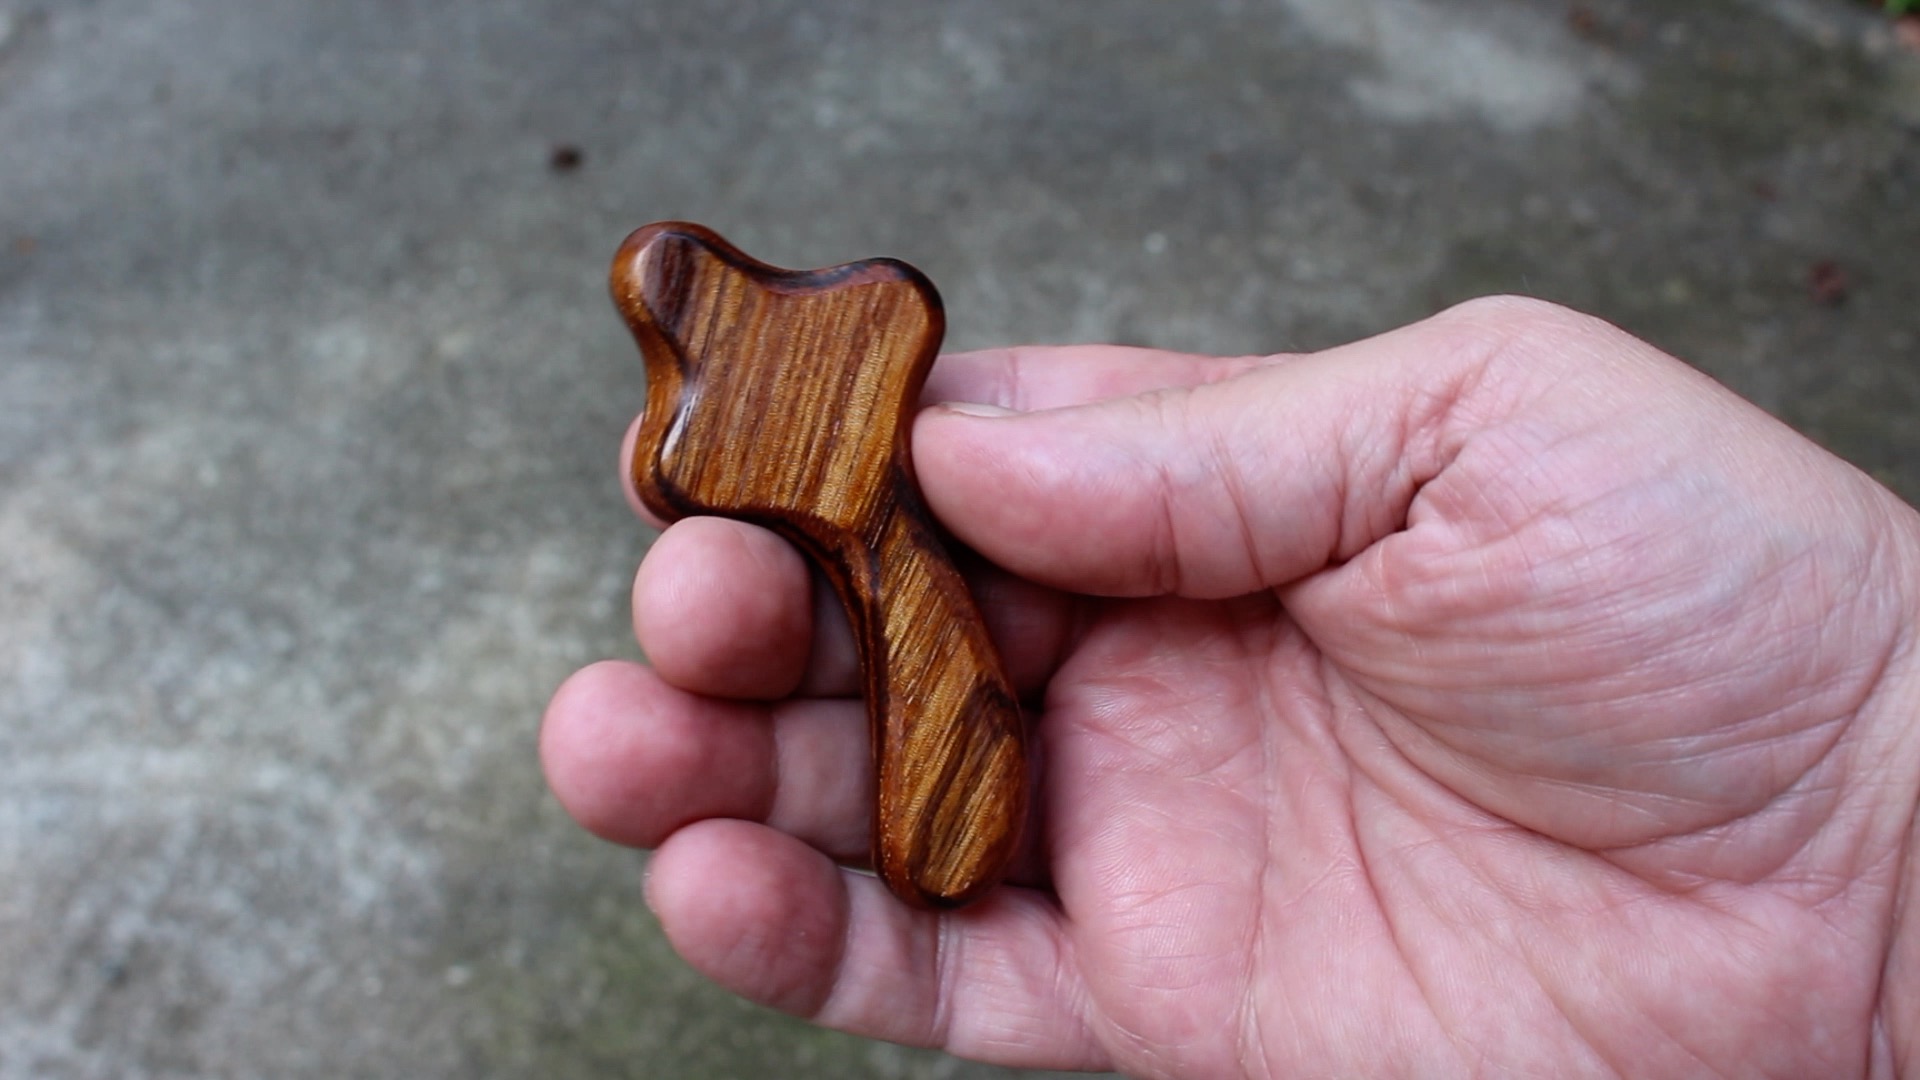 Pocket Cross, Olive Wood Pocket Cross